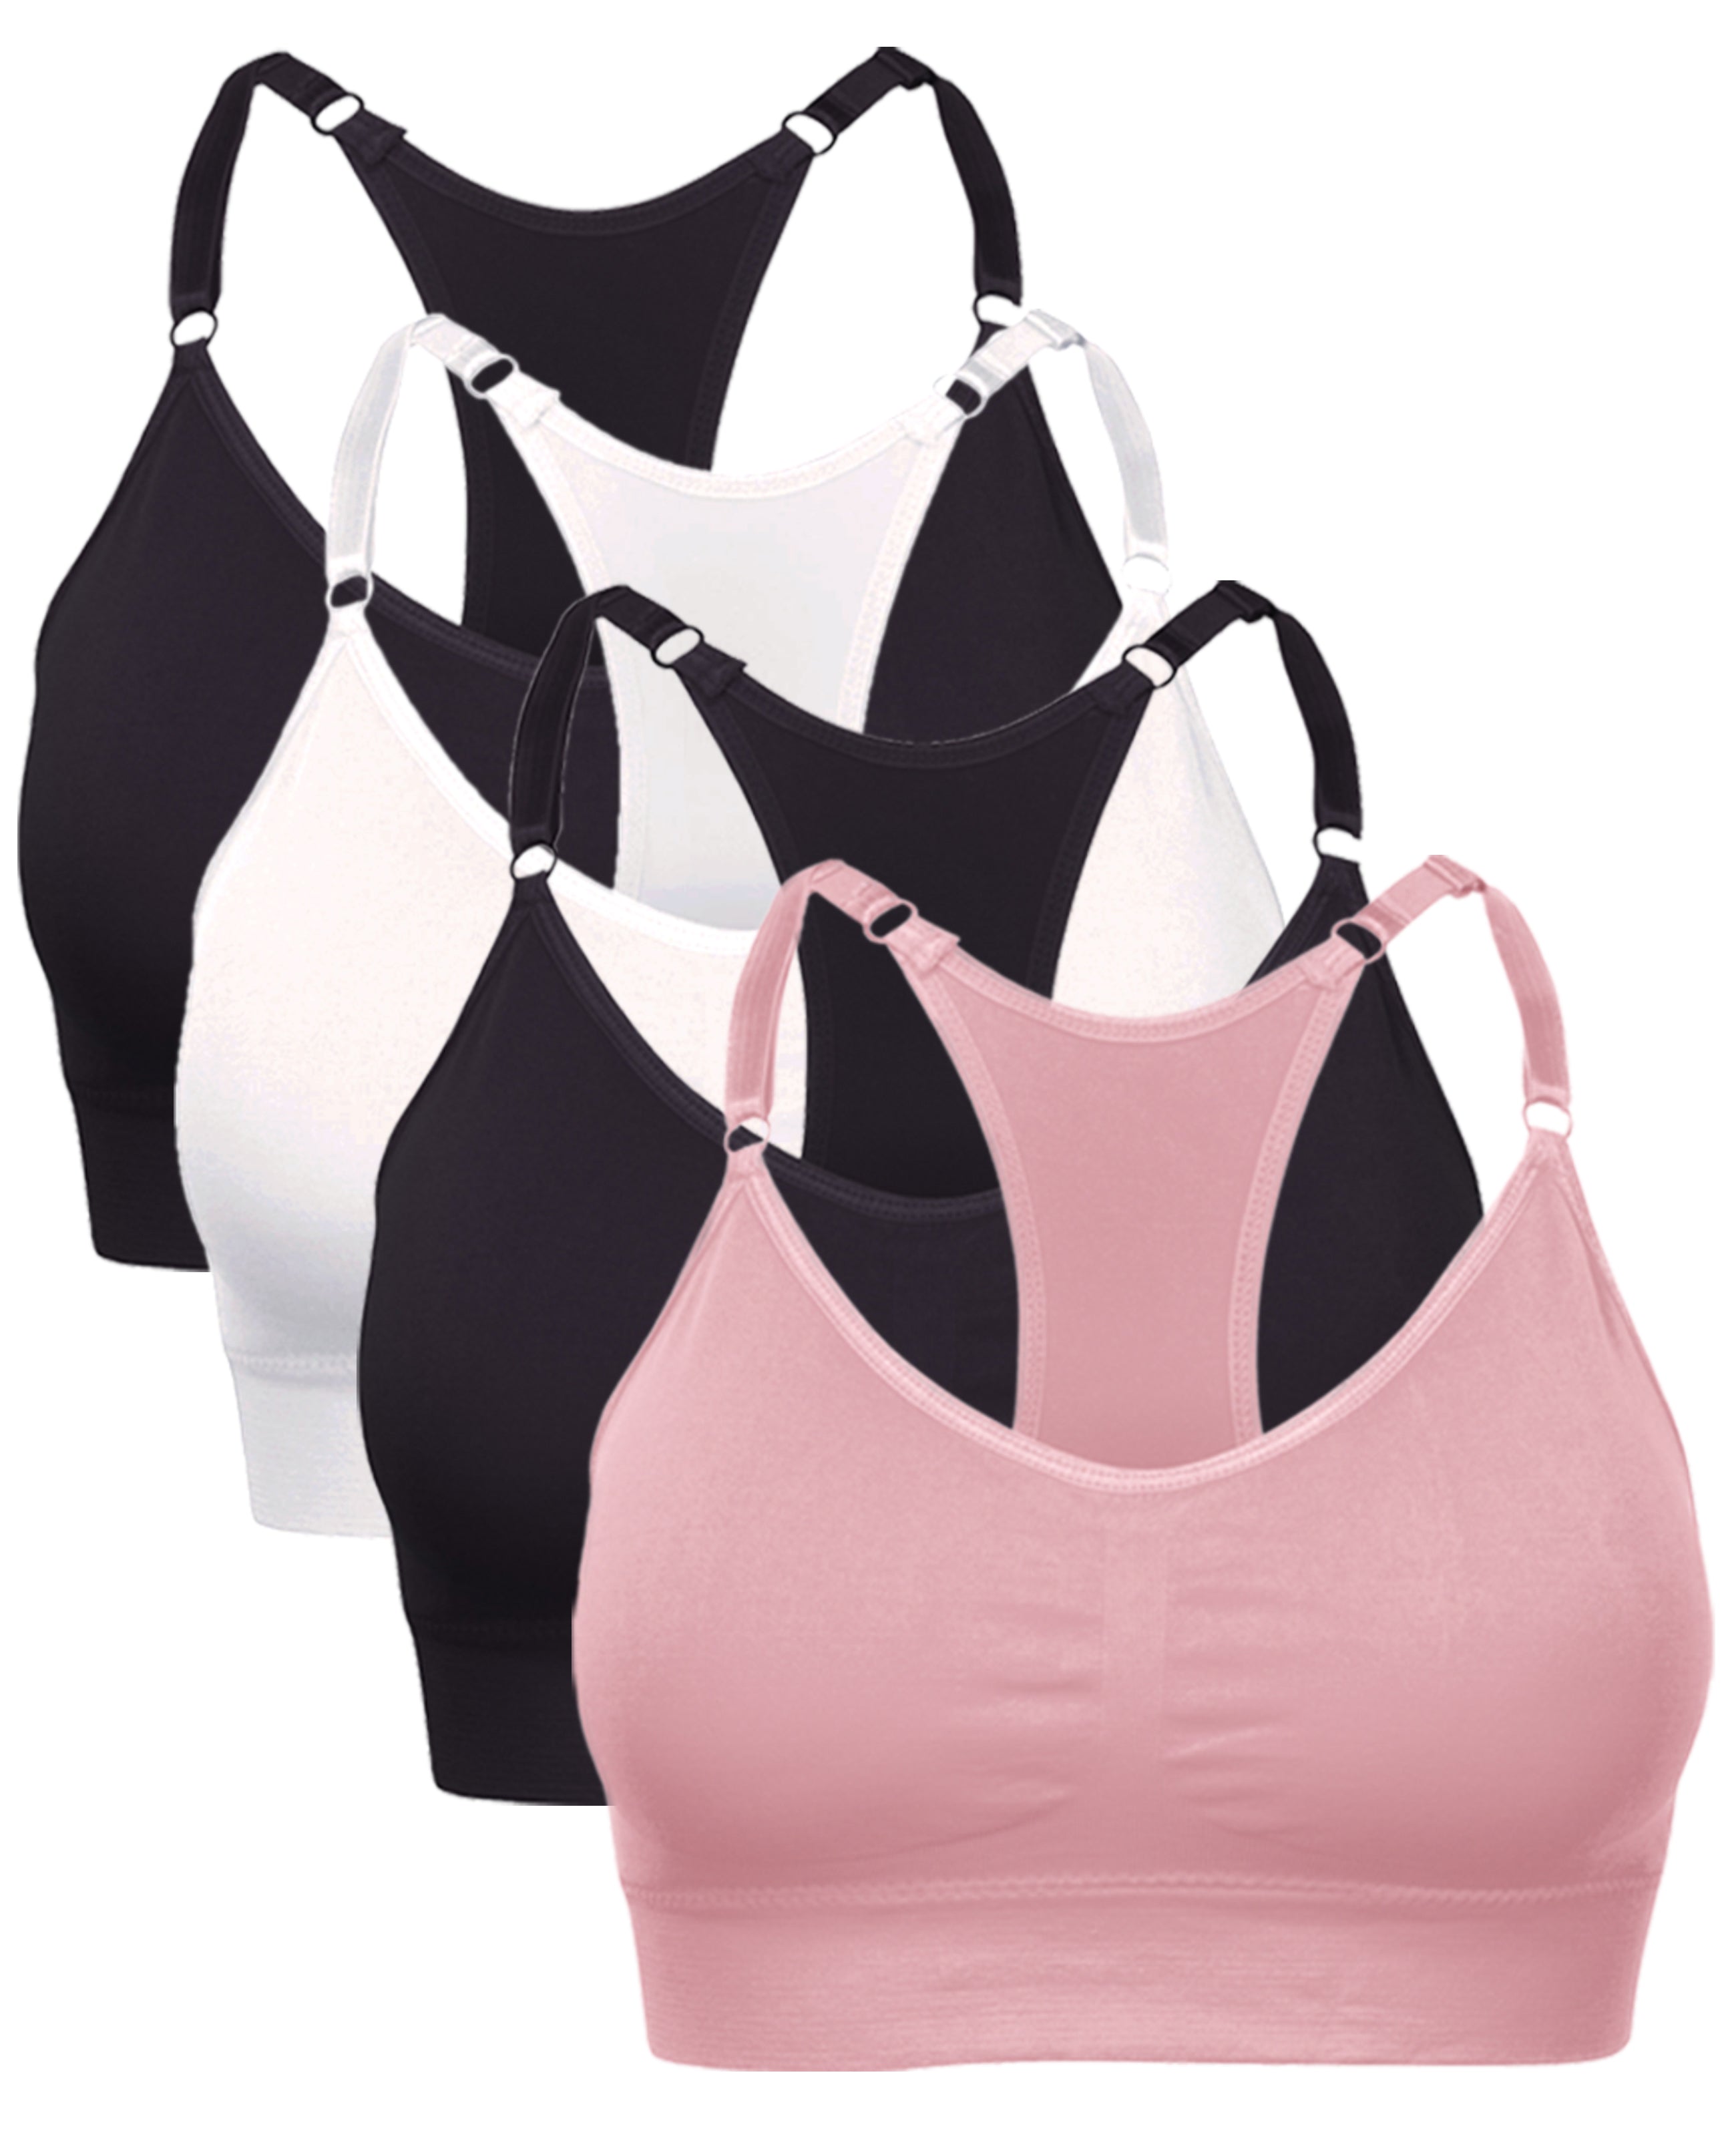 Women's seamless sports bra free size, Printed at Rs 120/piece in Mumbai